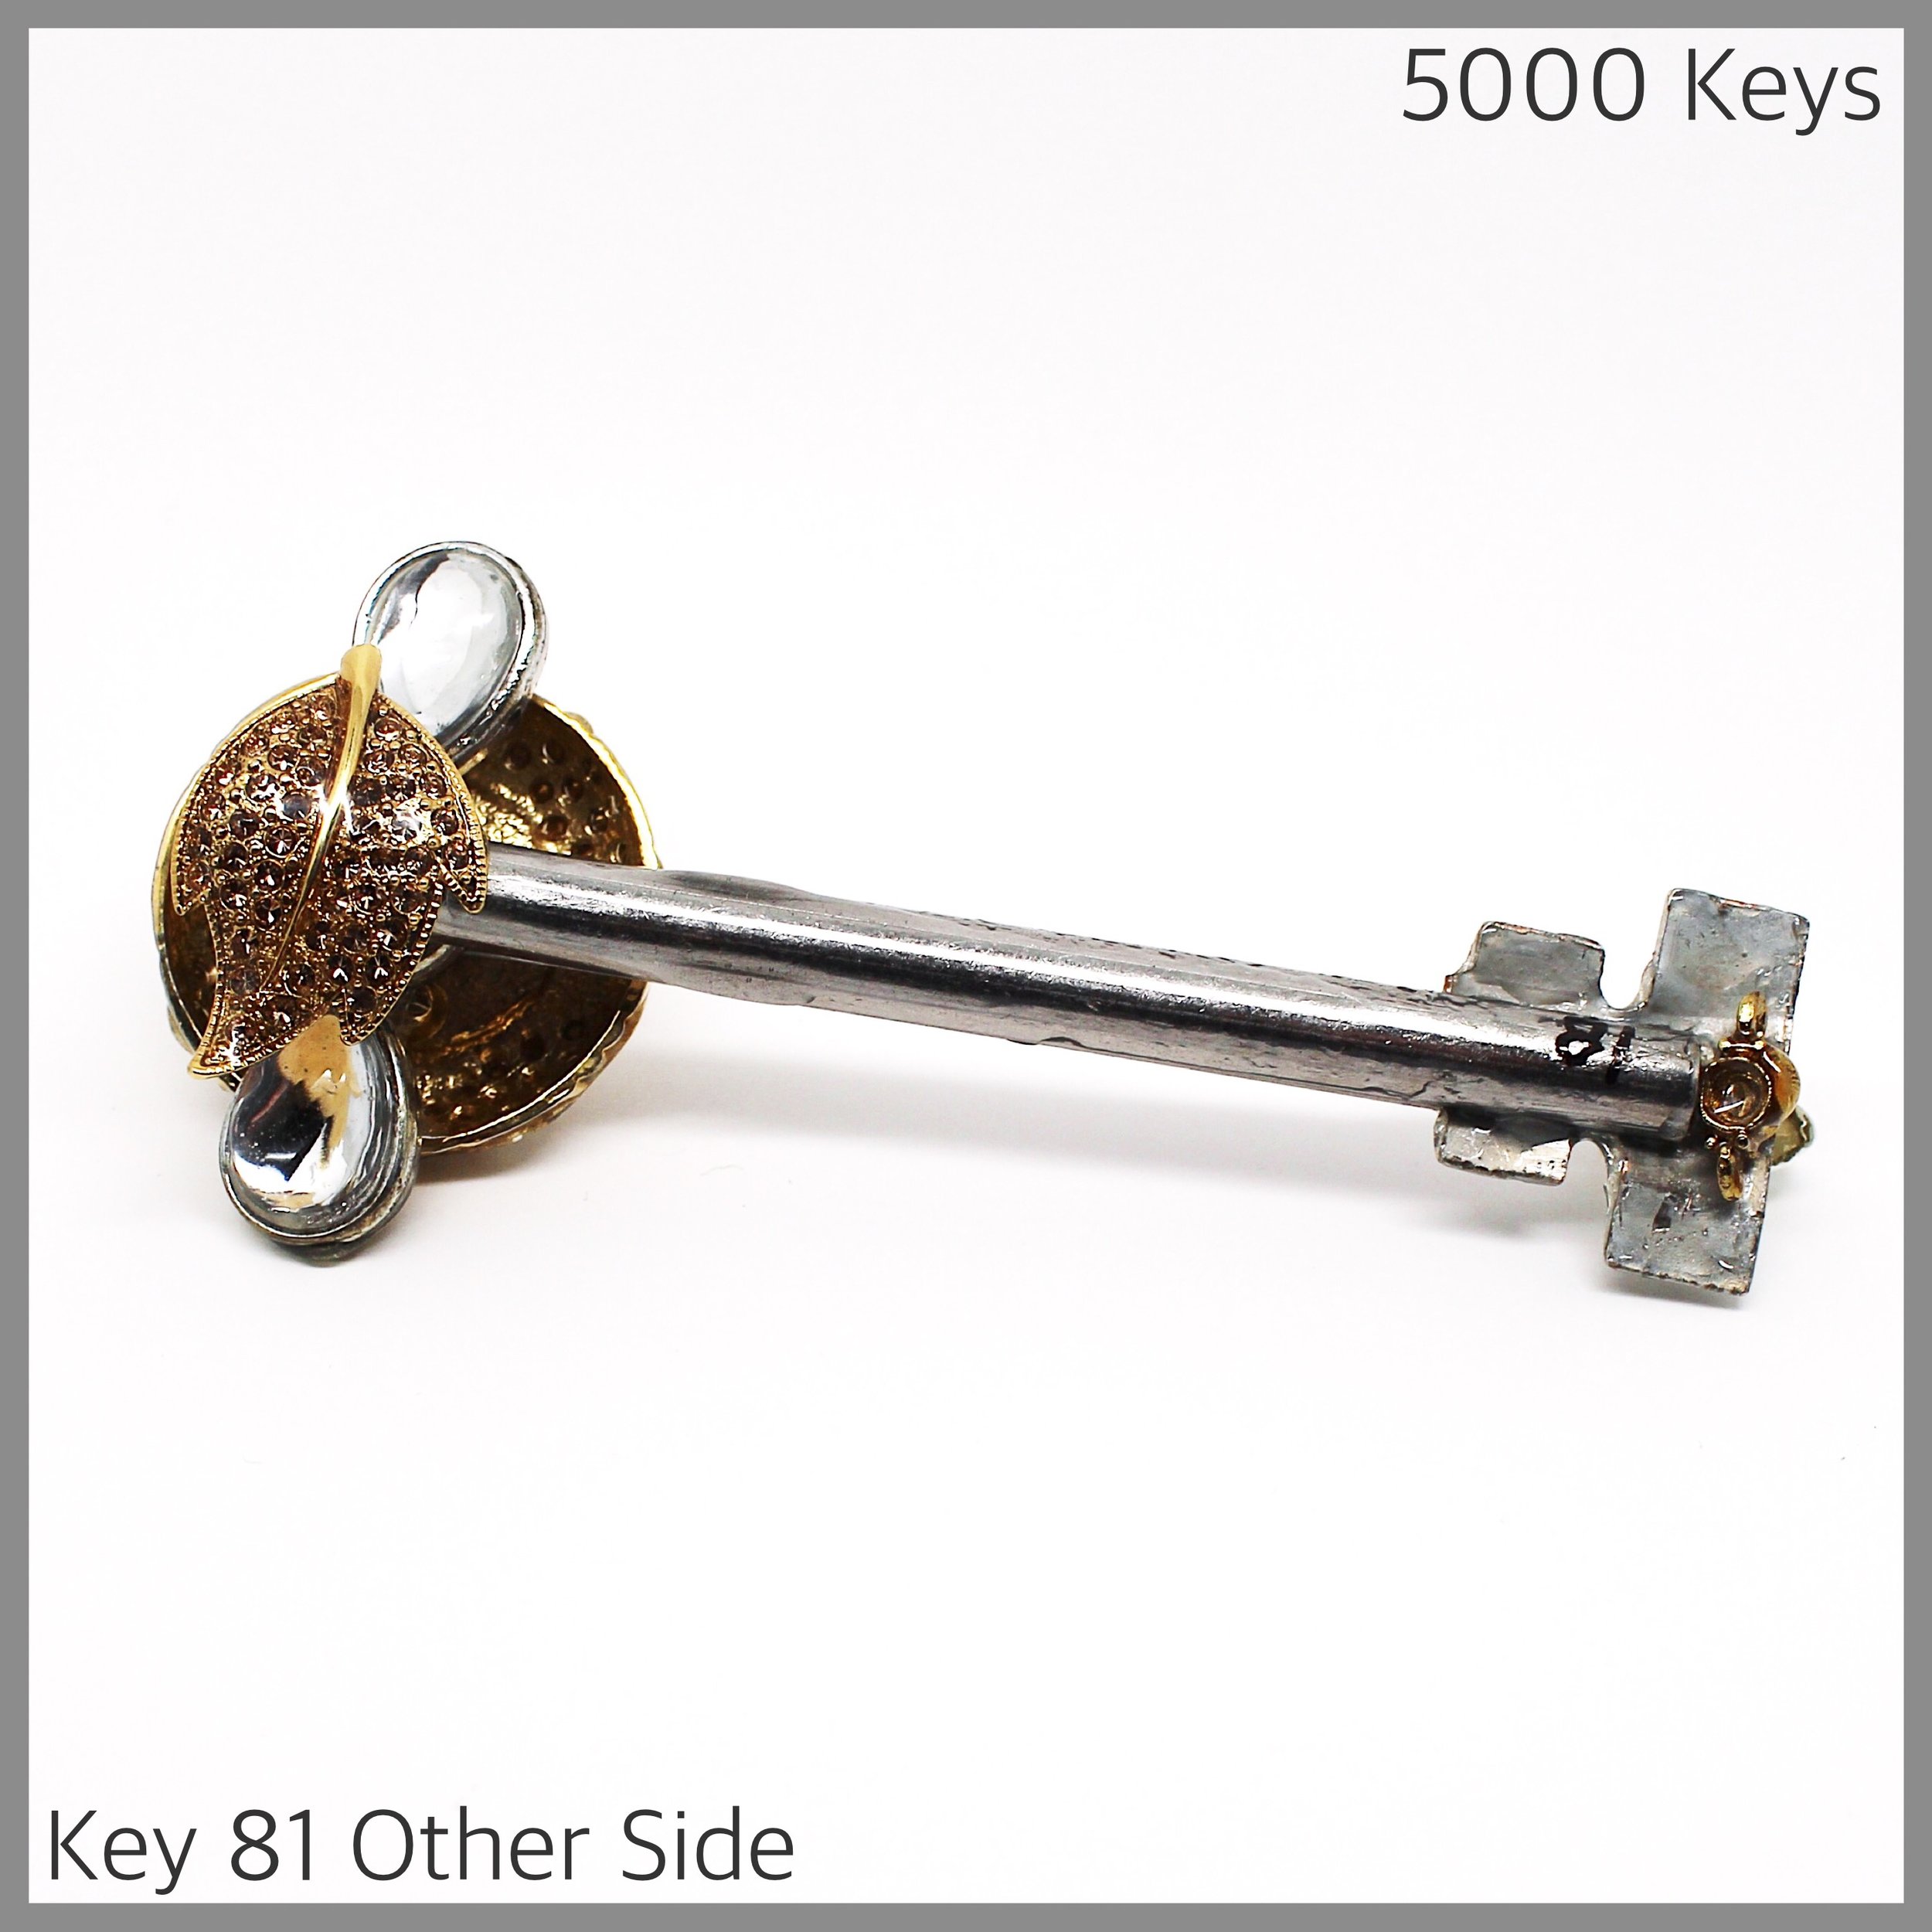 Key 81 other side - 1.JPG